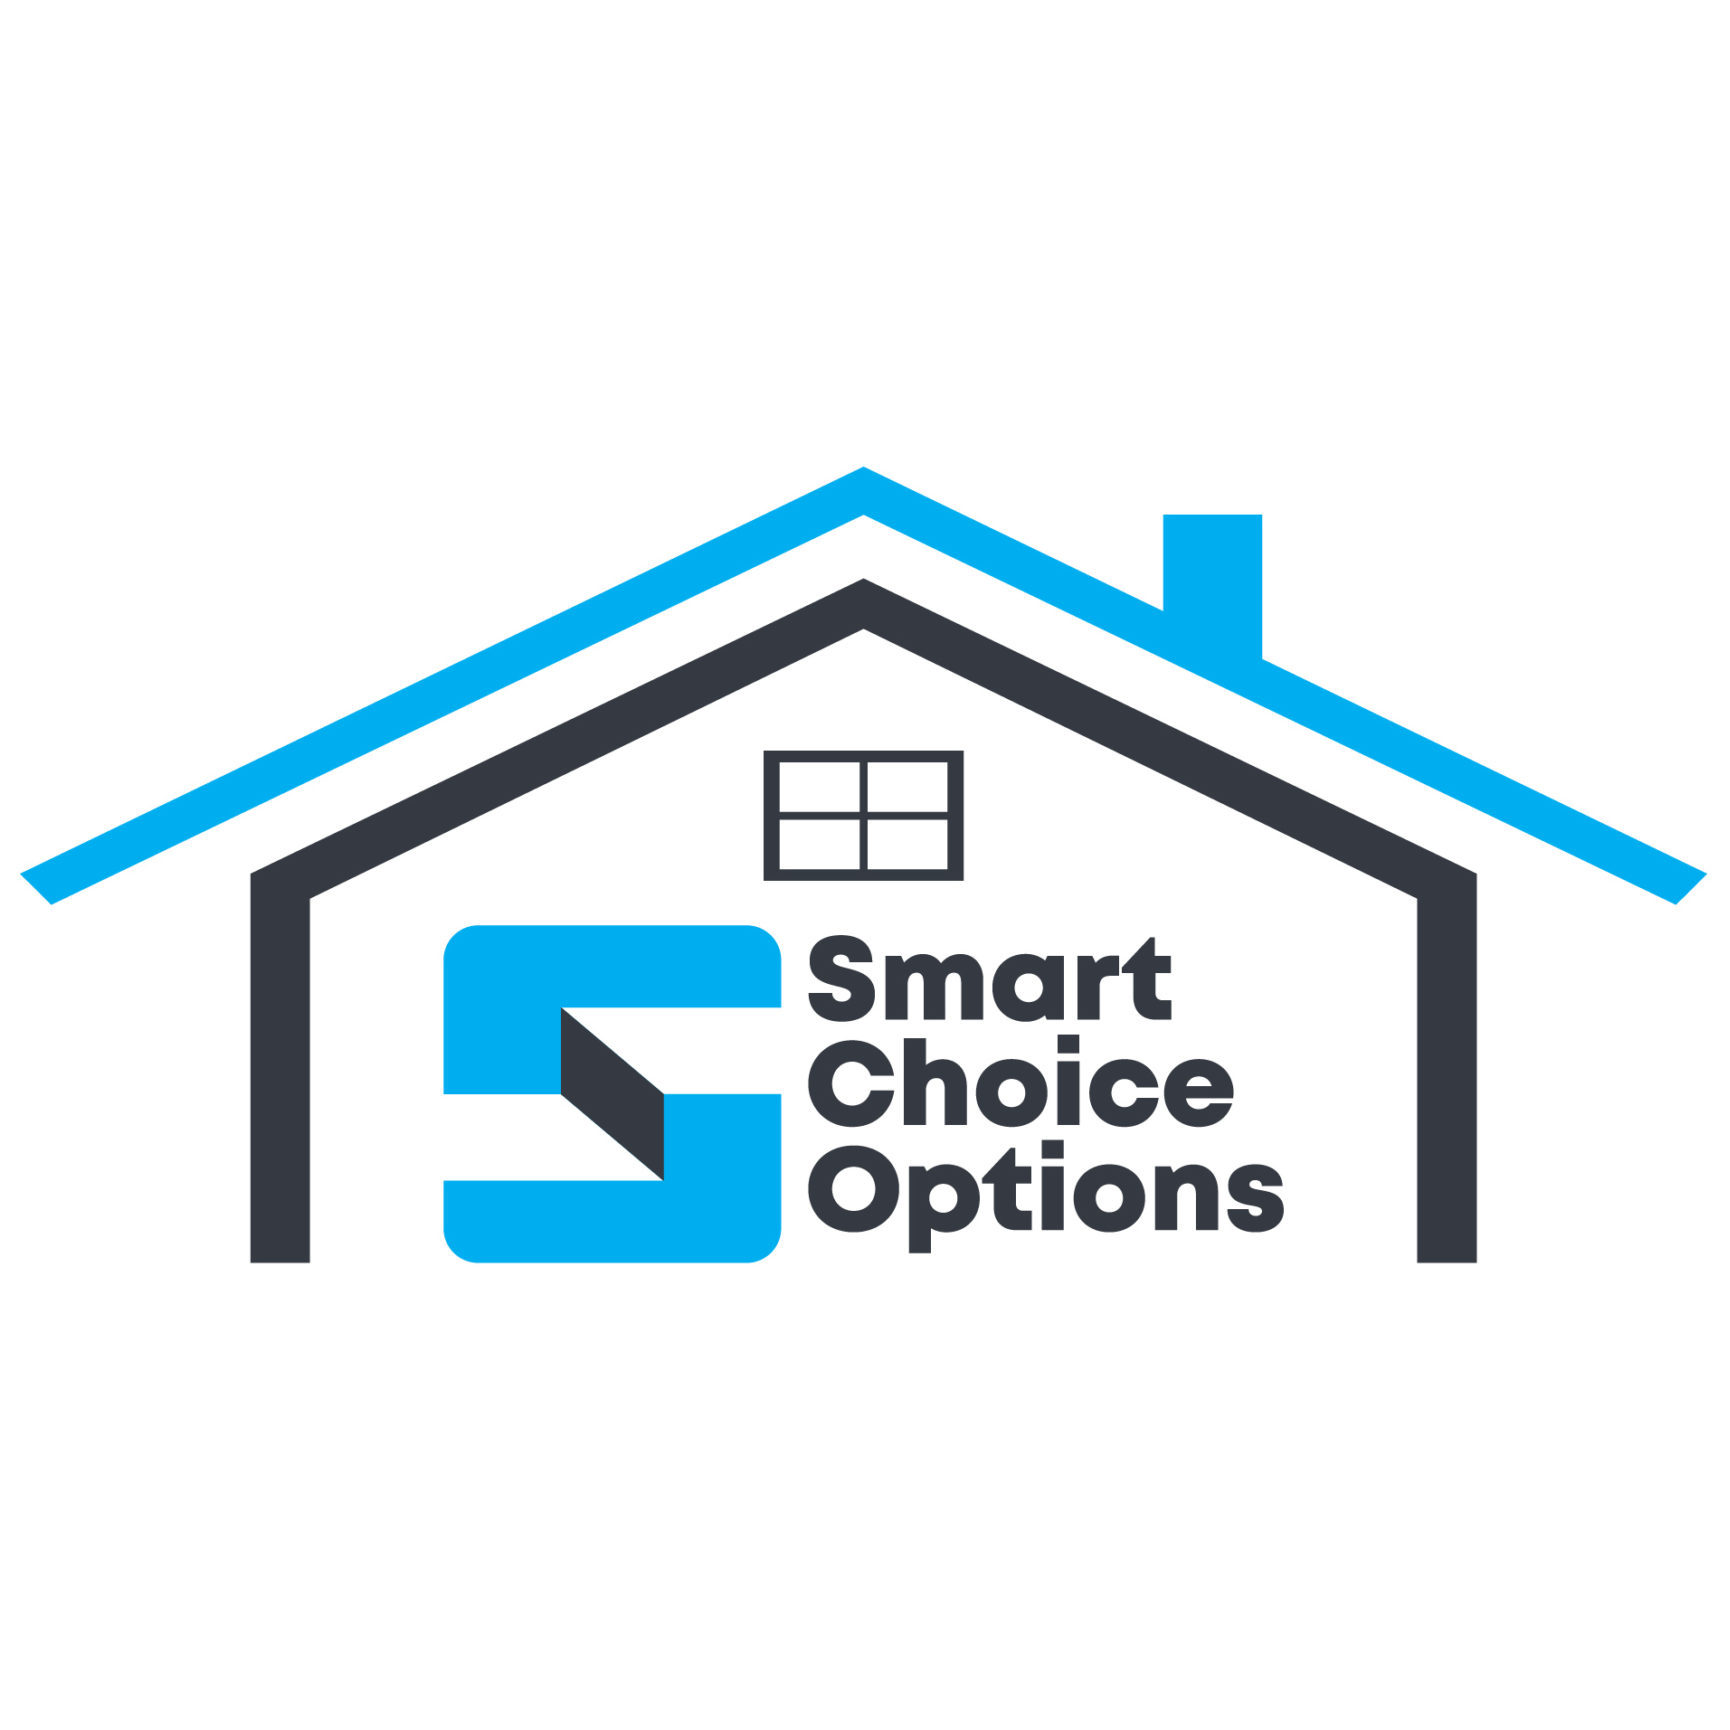 Smart Choice Options